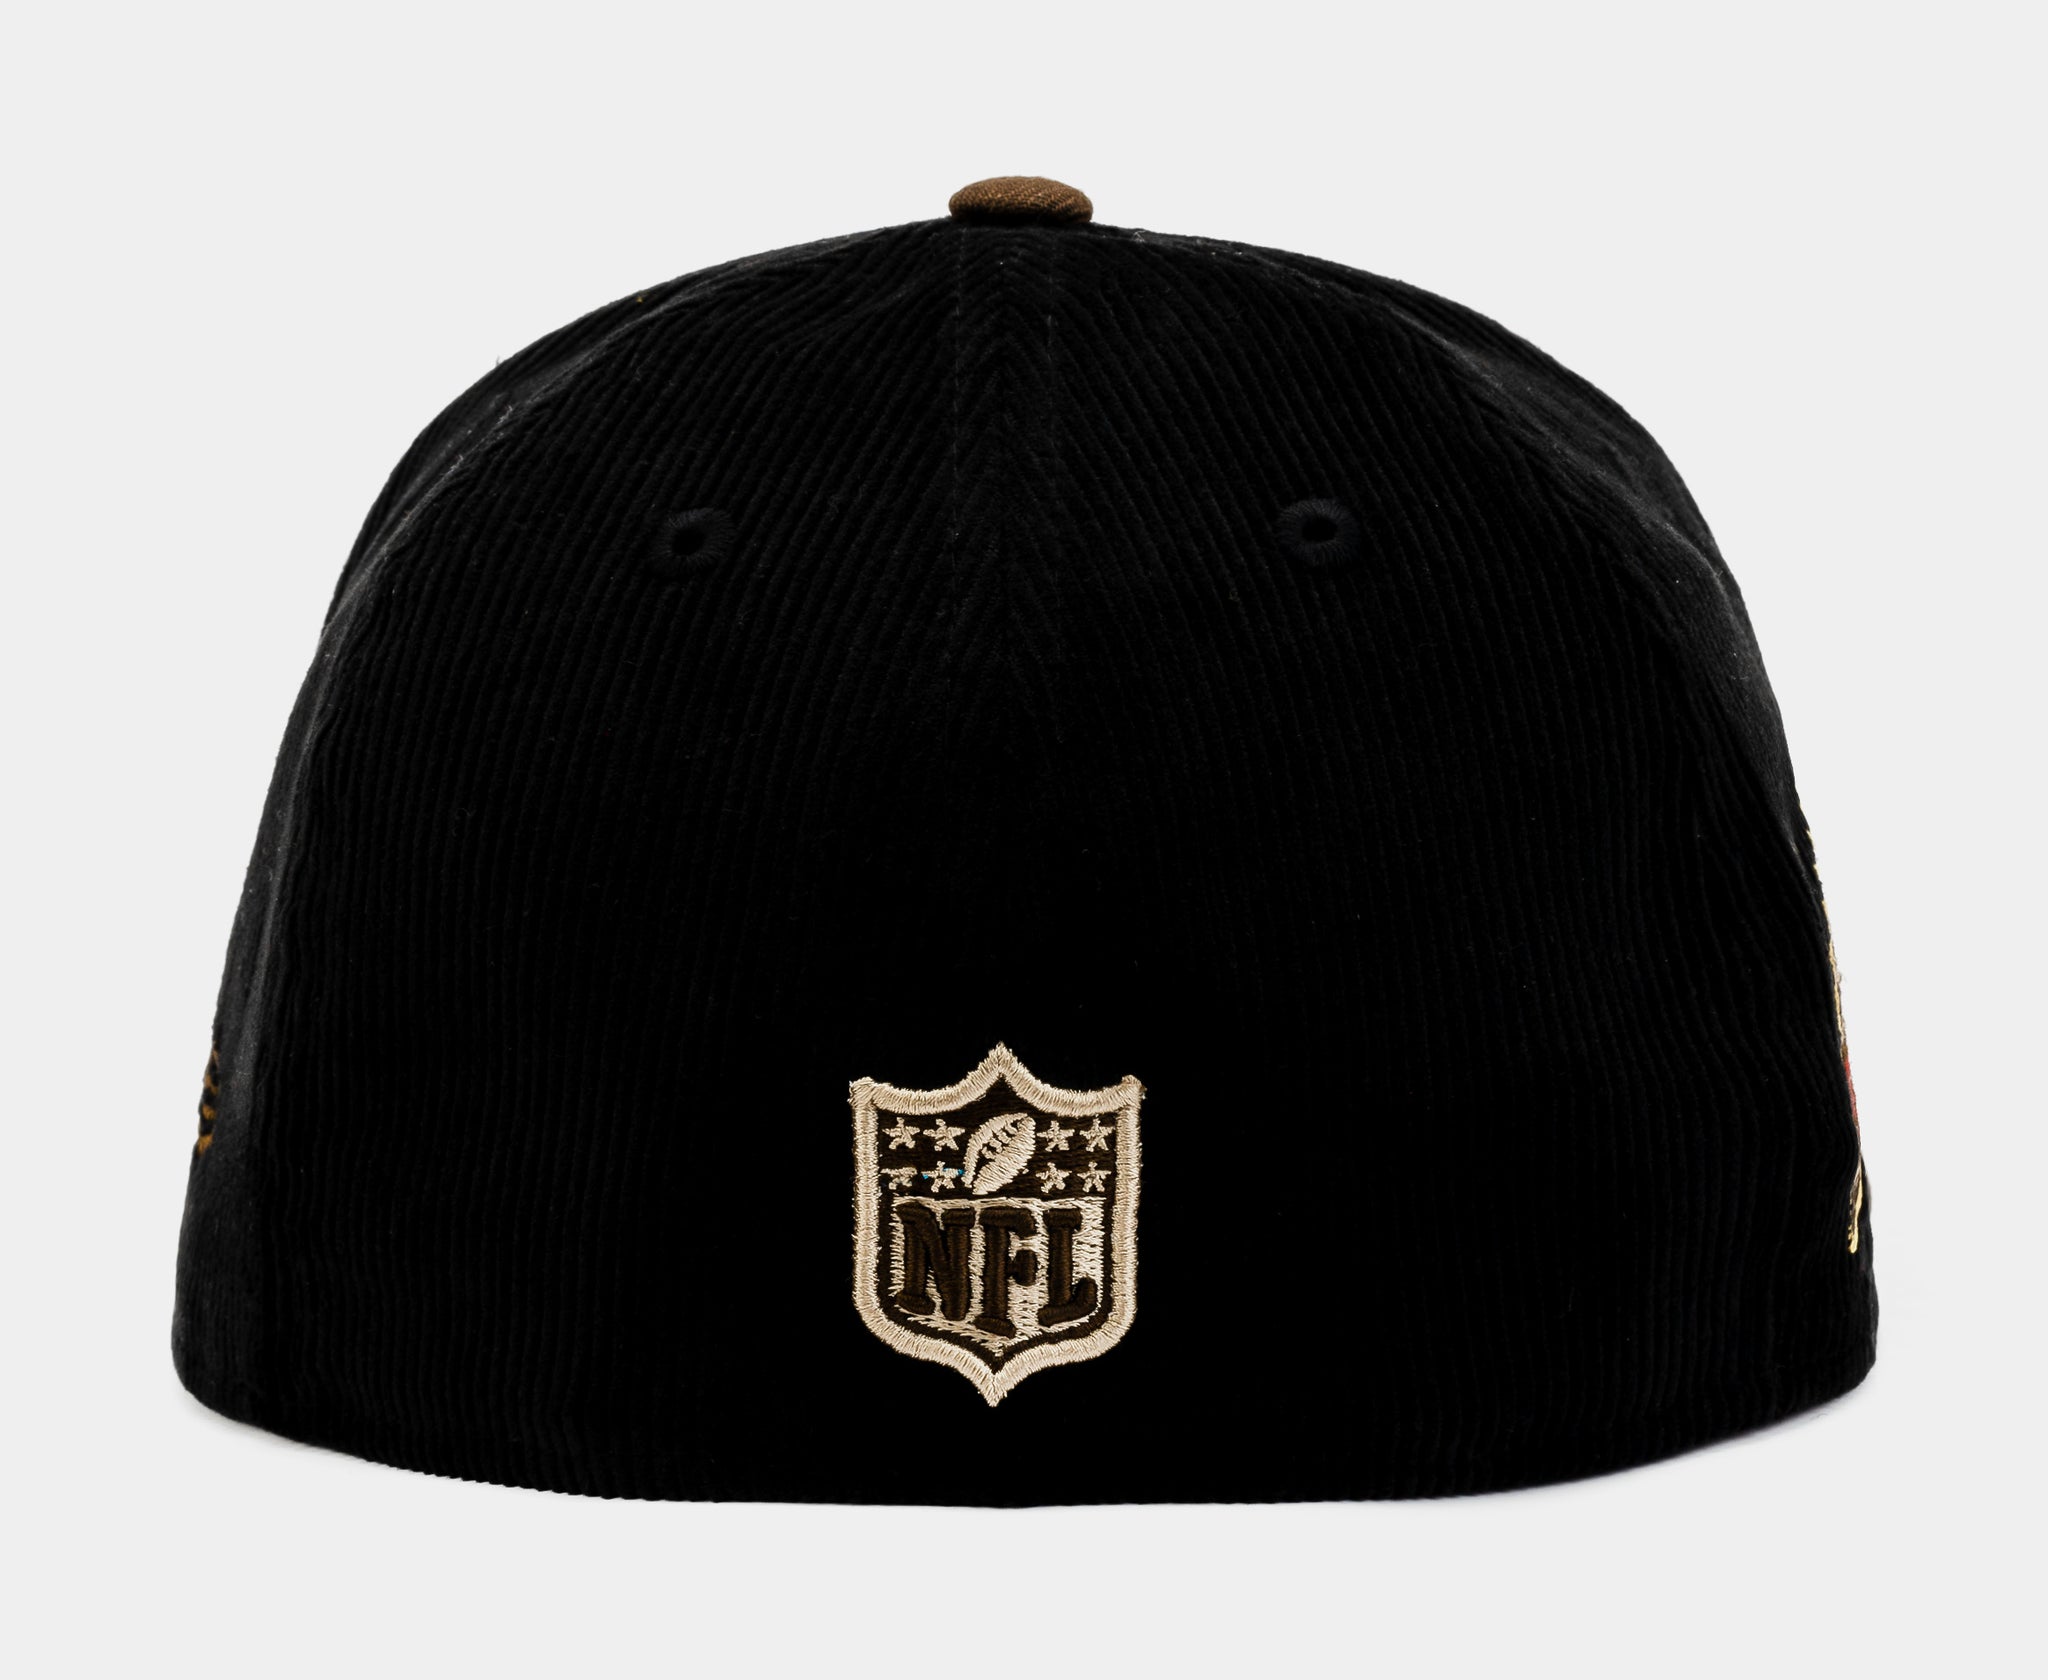 Las Vegas Raiders Men's New Era Black Basic 59Fifty Fitted Hat